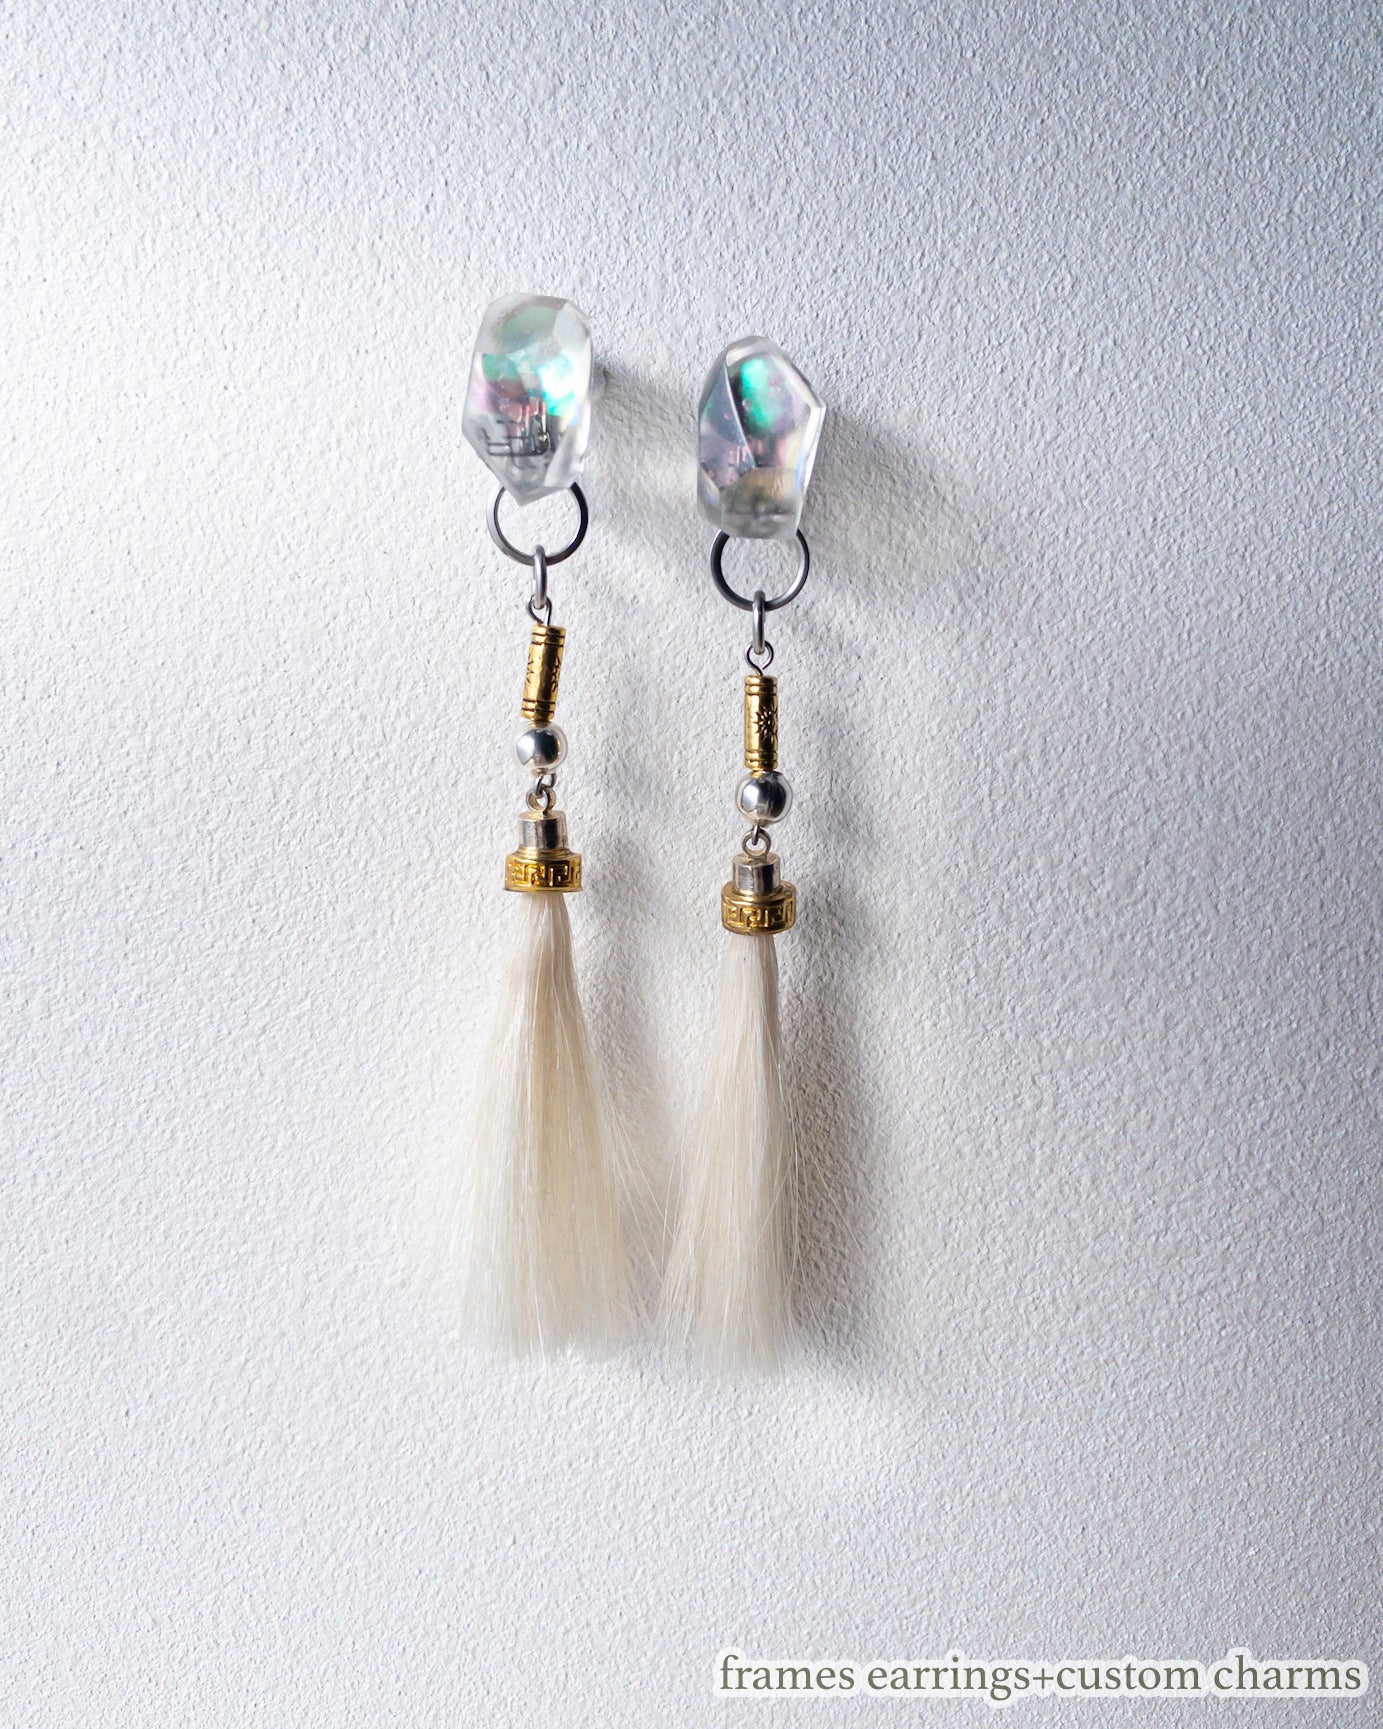 Frames earrings/crystals/Alice in wonderland_frost clear 7-b